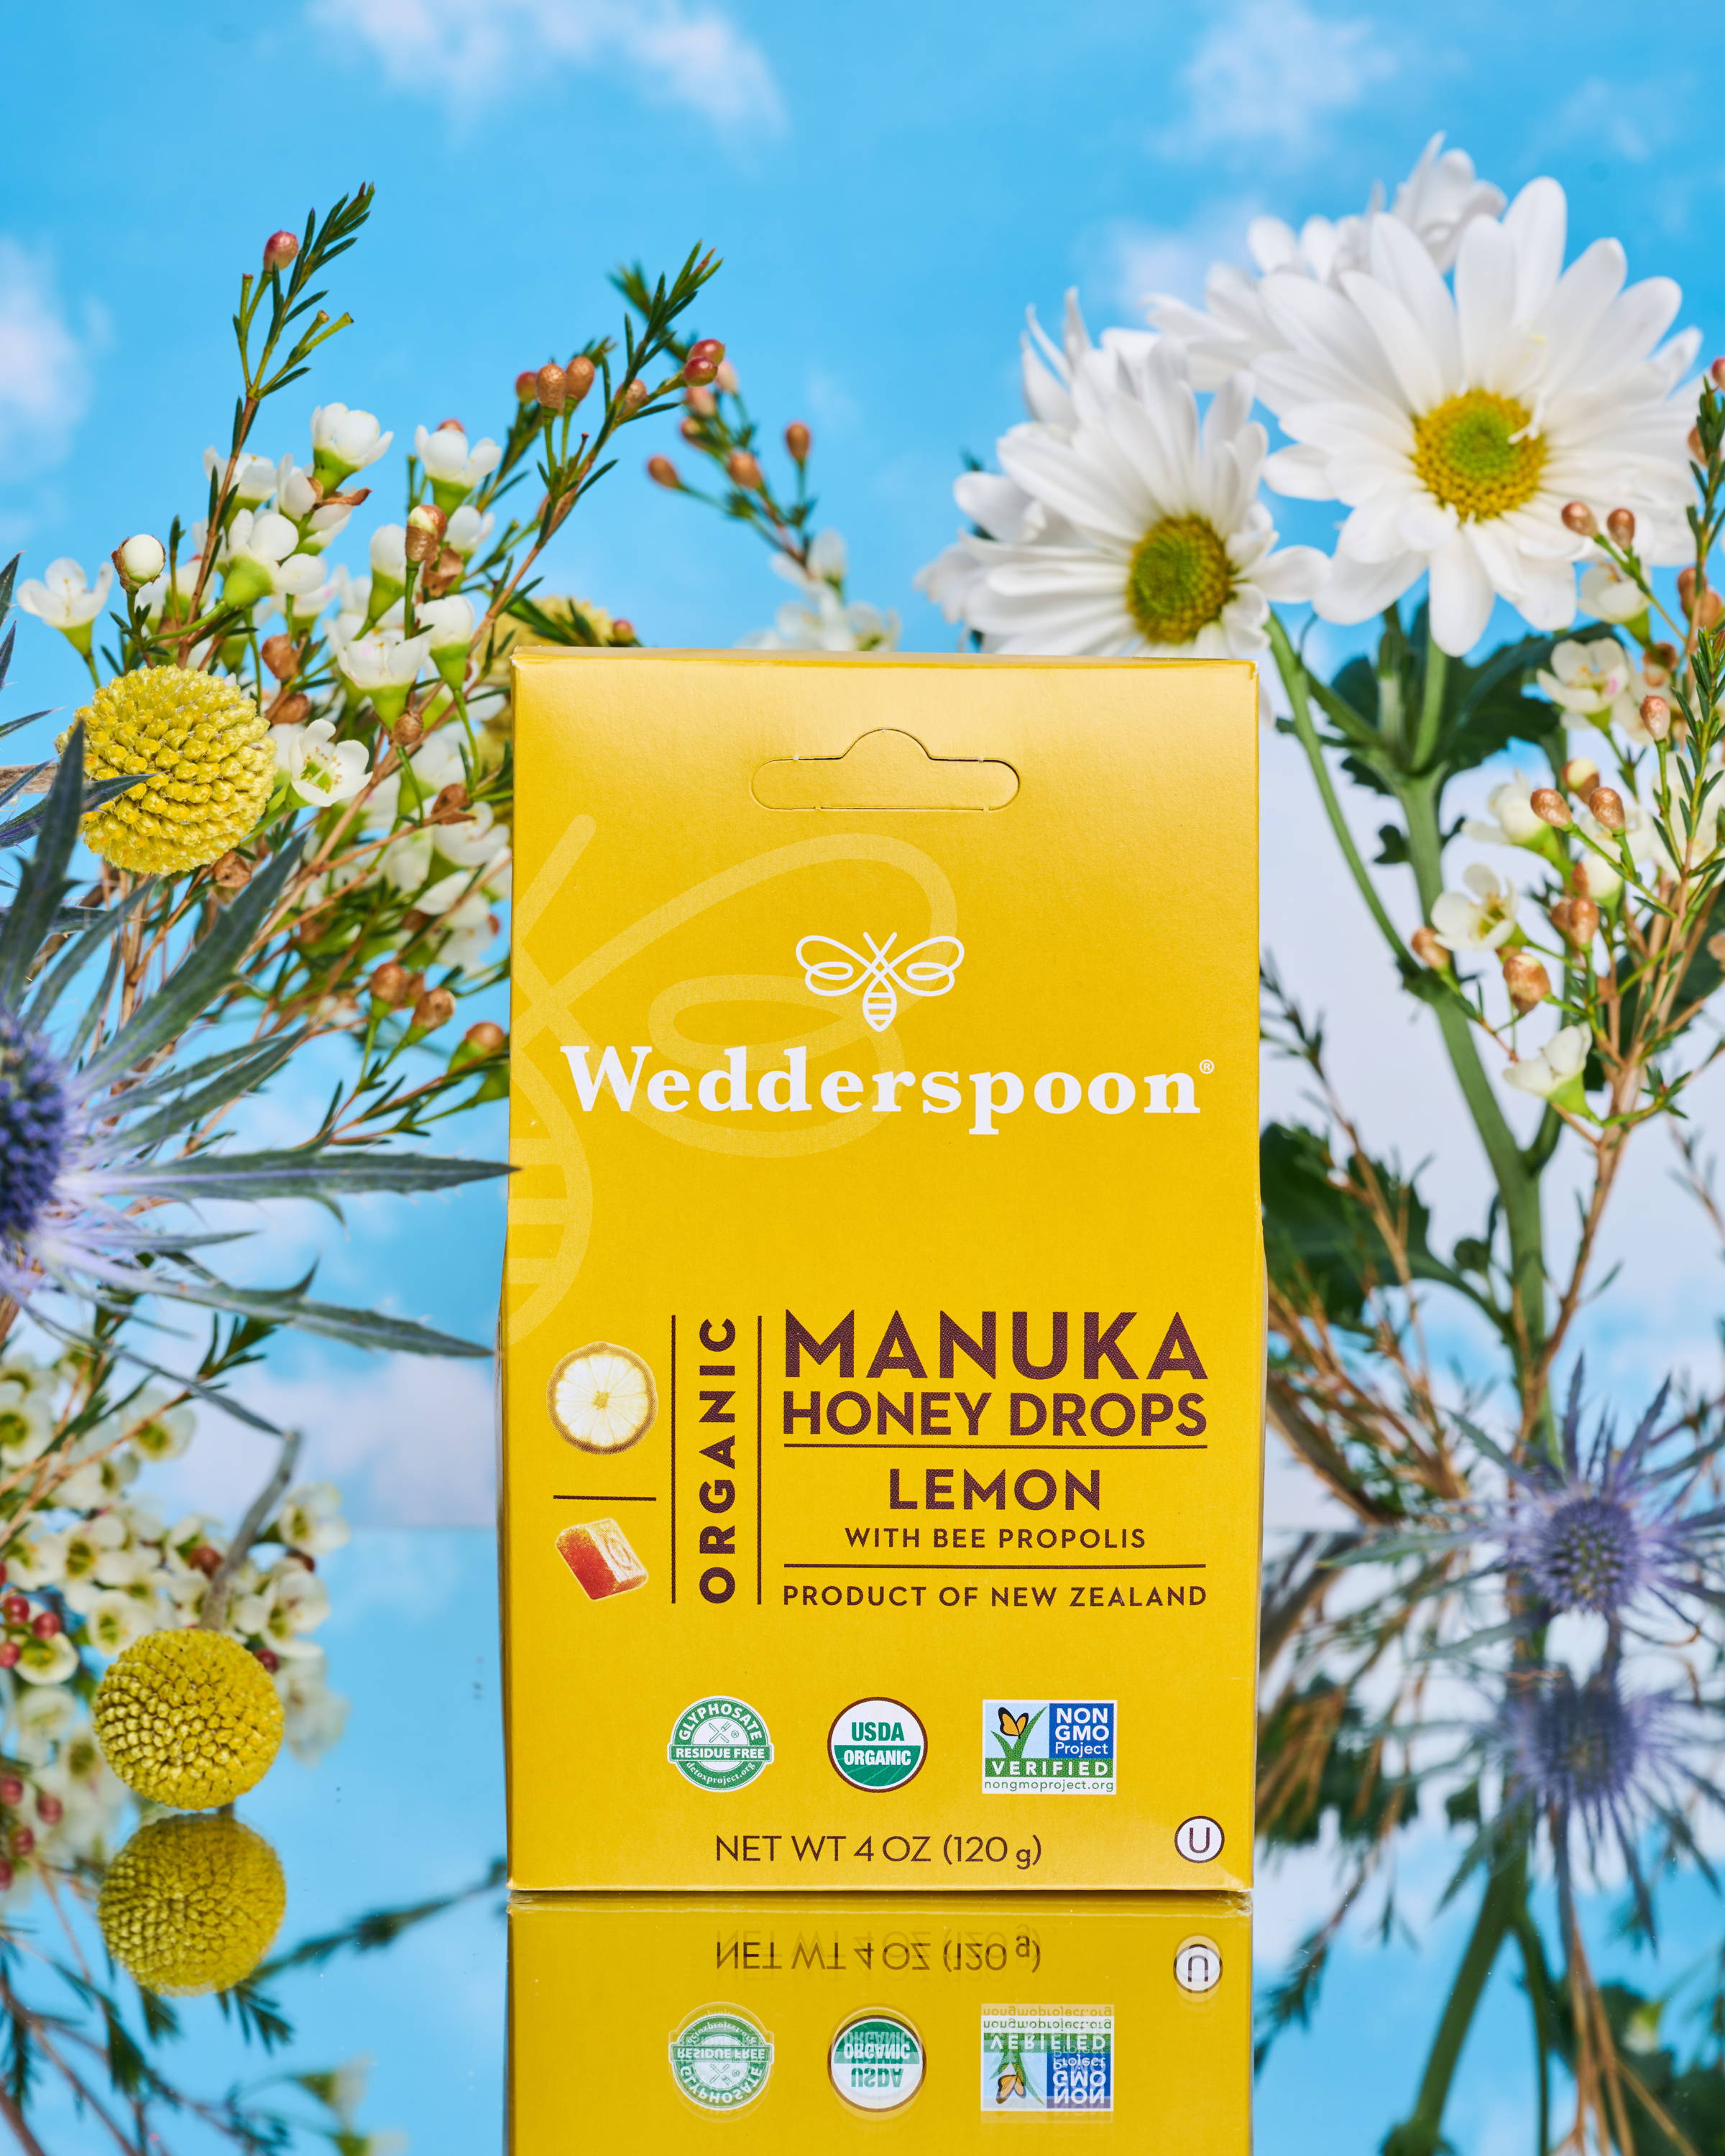 Box of lemon Manuka honey Drops in front of Pollinator friendly flowers